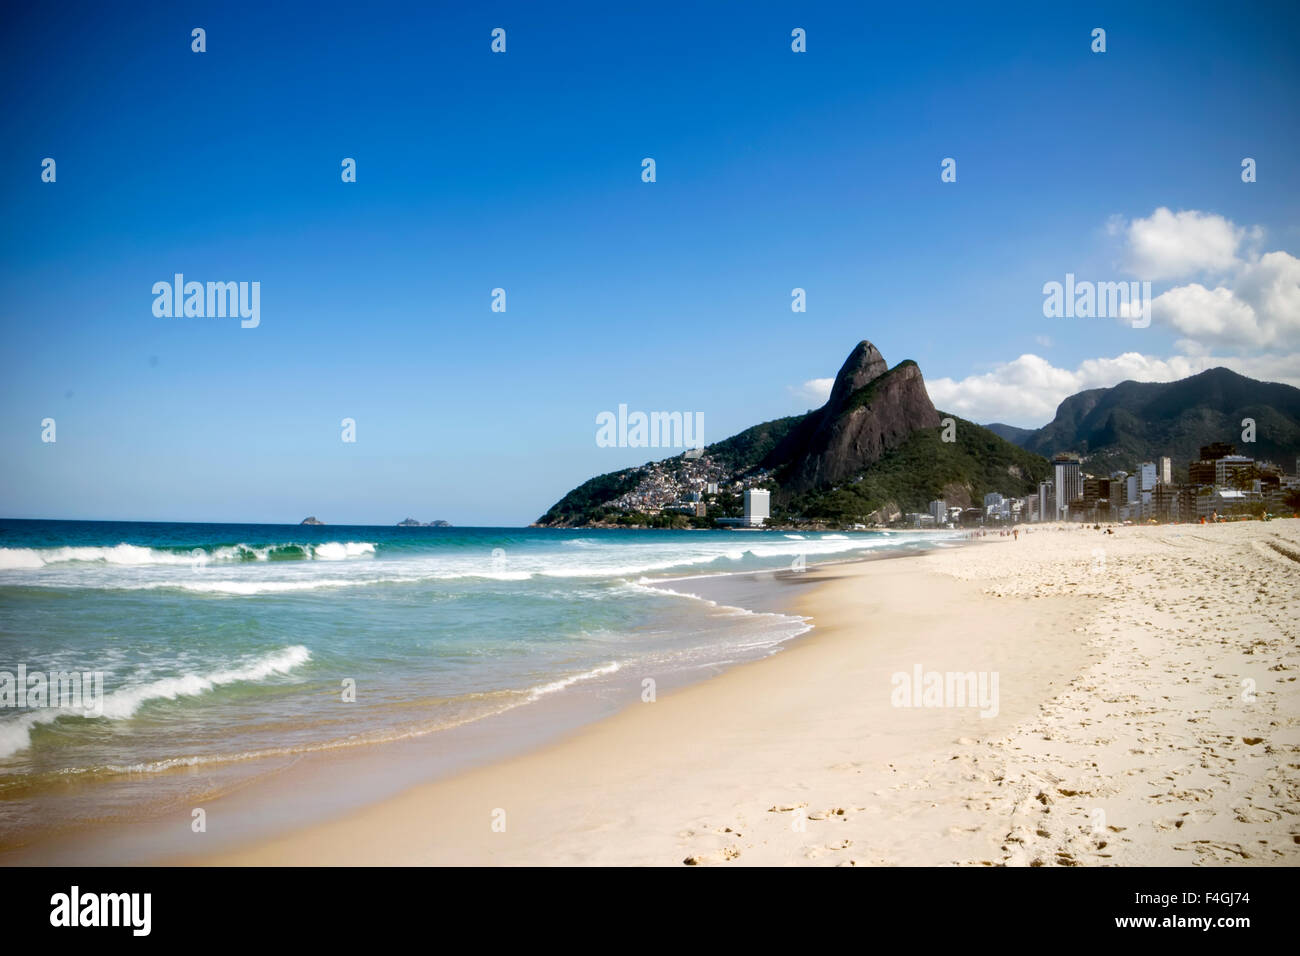 View of Dois Irmaos Mountains and Empty Ipanema Beach - Rio de Janeiro, Brazil Stock Photo